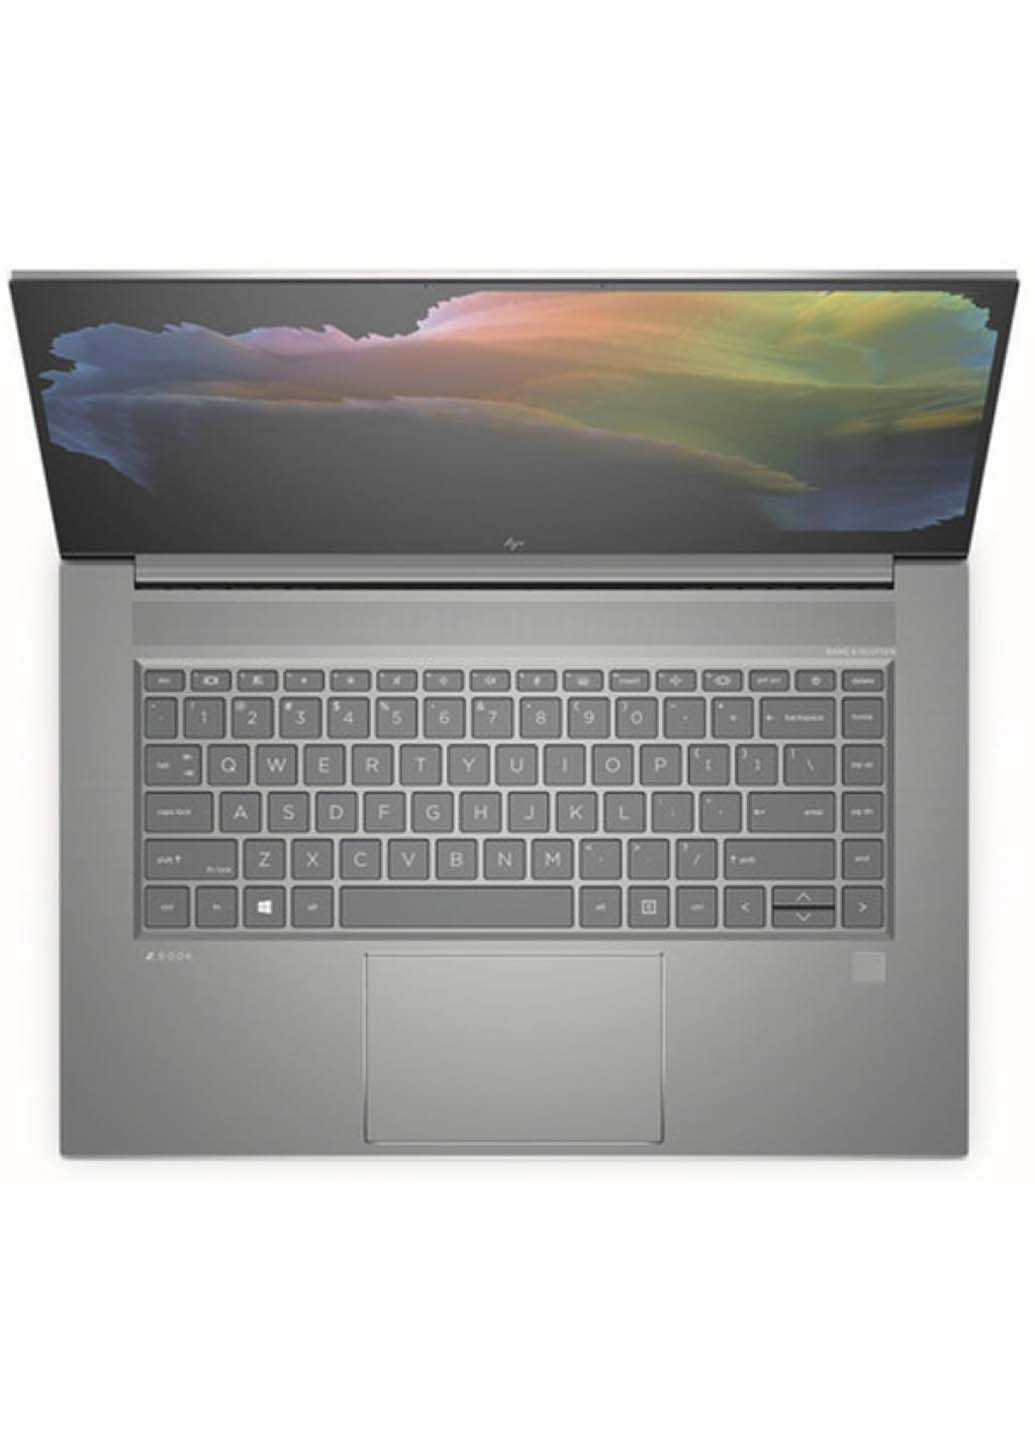 Ноутбук ZBook Create G7 (2W982AV_V1) HP (246765201)